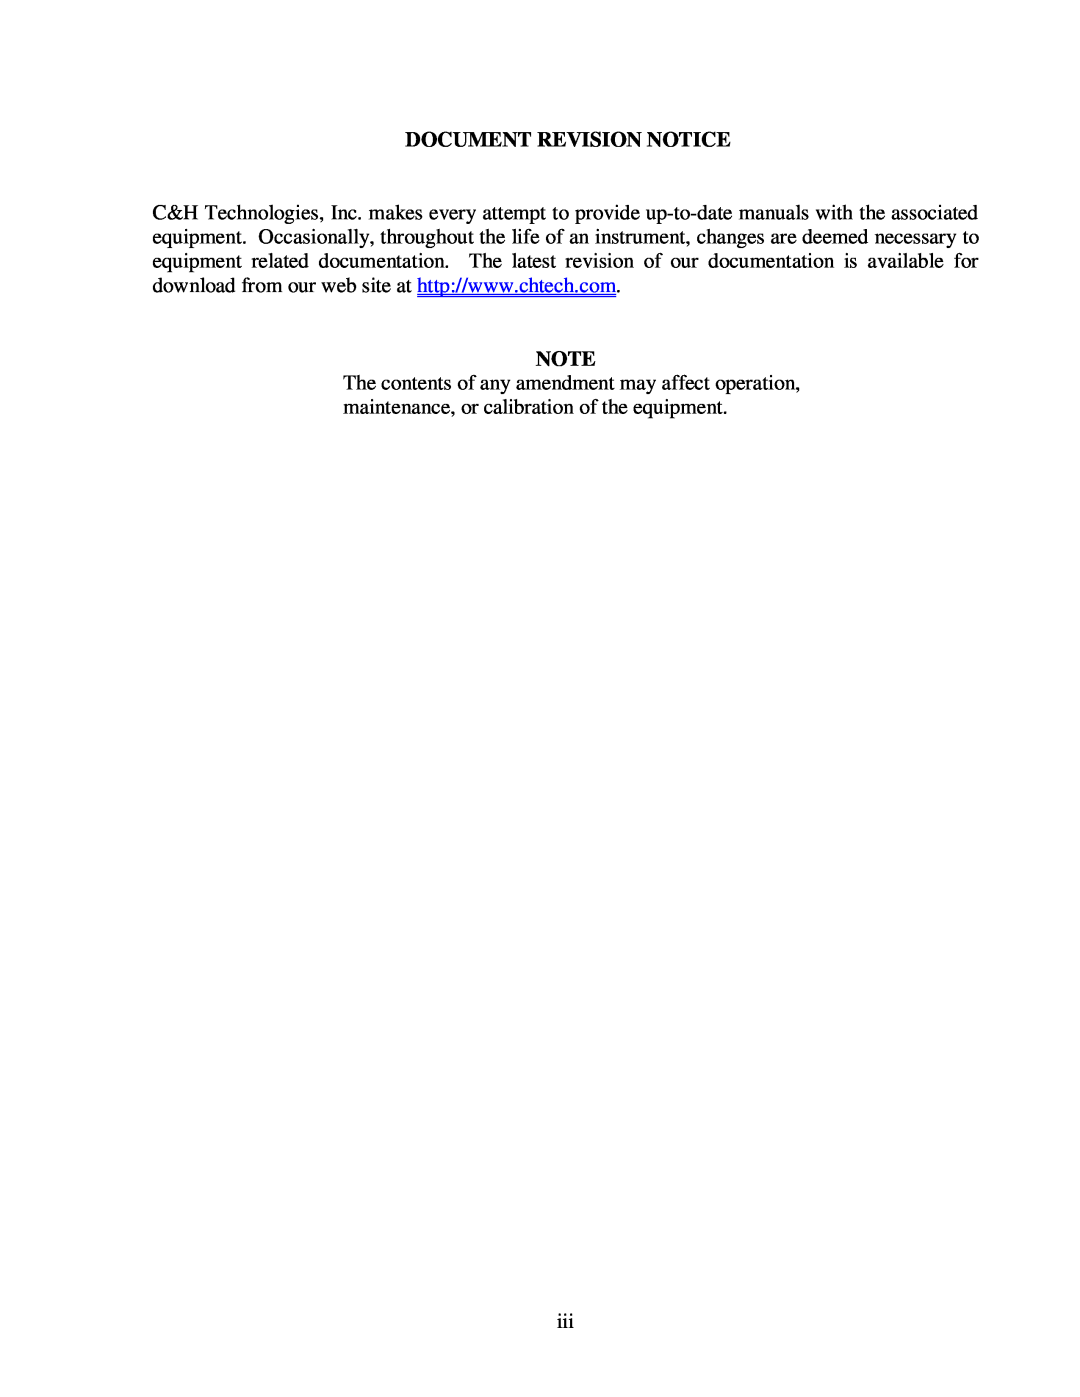 CH Tech EM405D user manual Document Revision Notice 